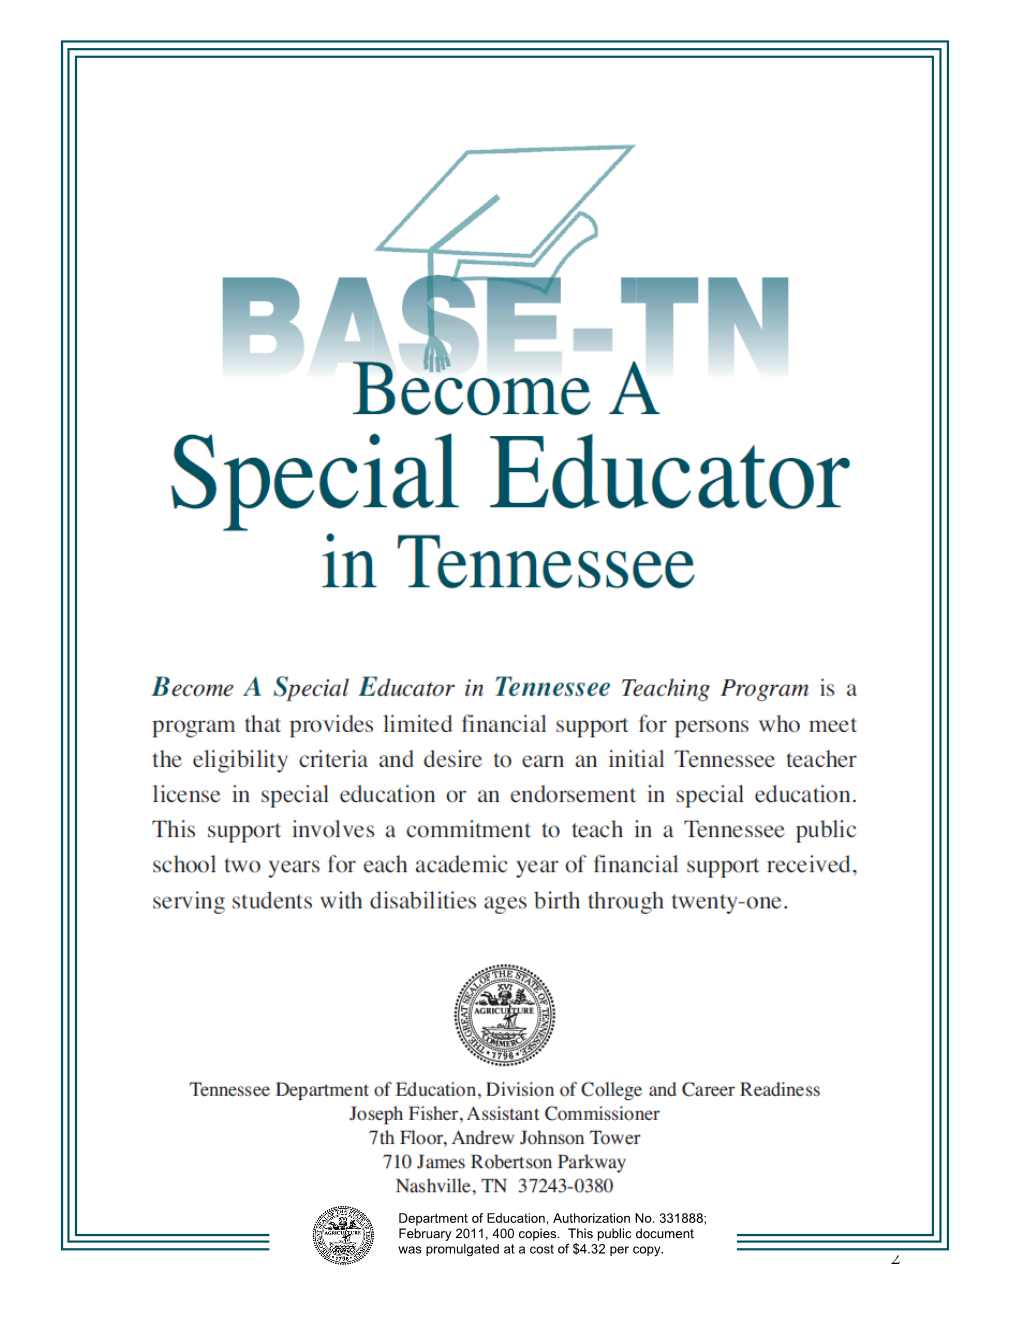 BASE-TN Teaching Program